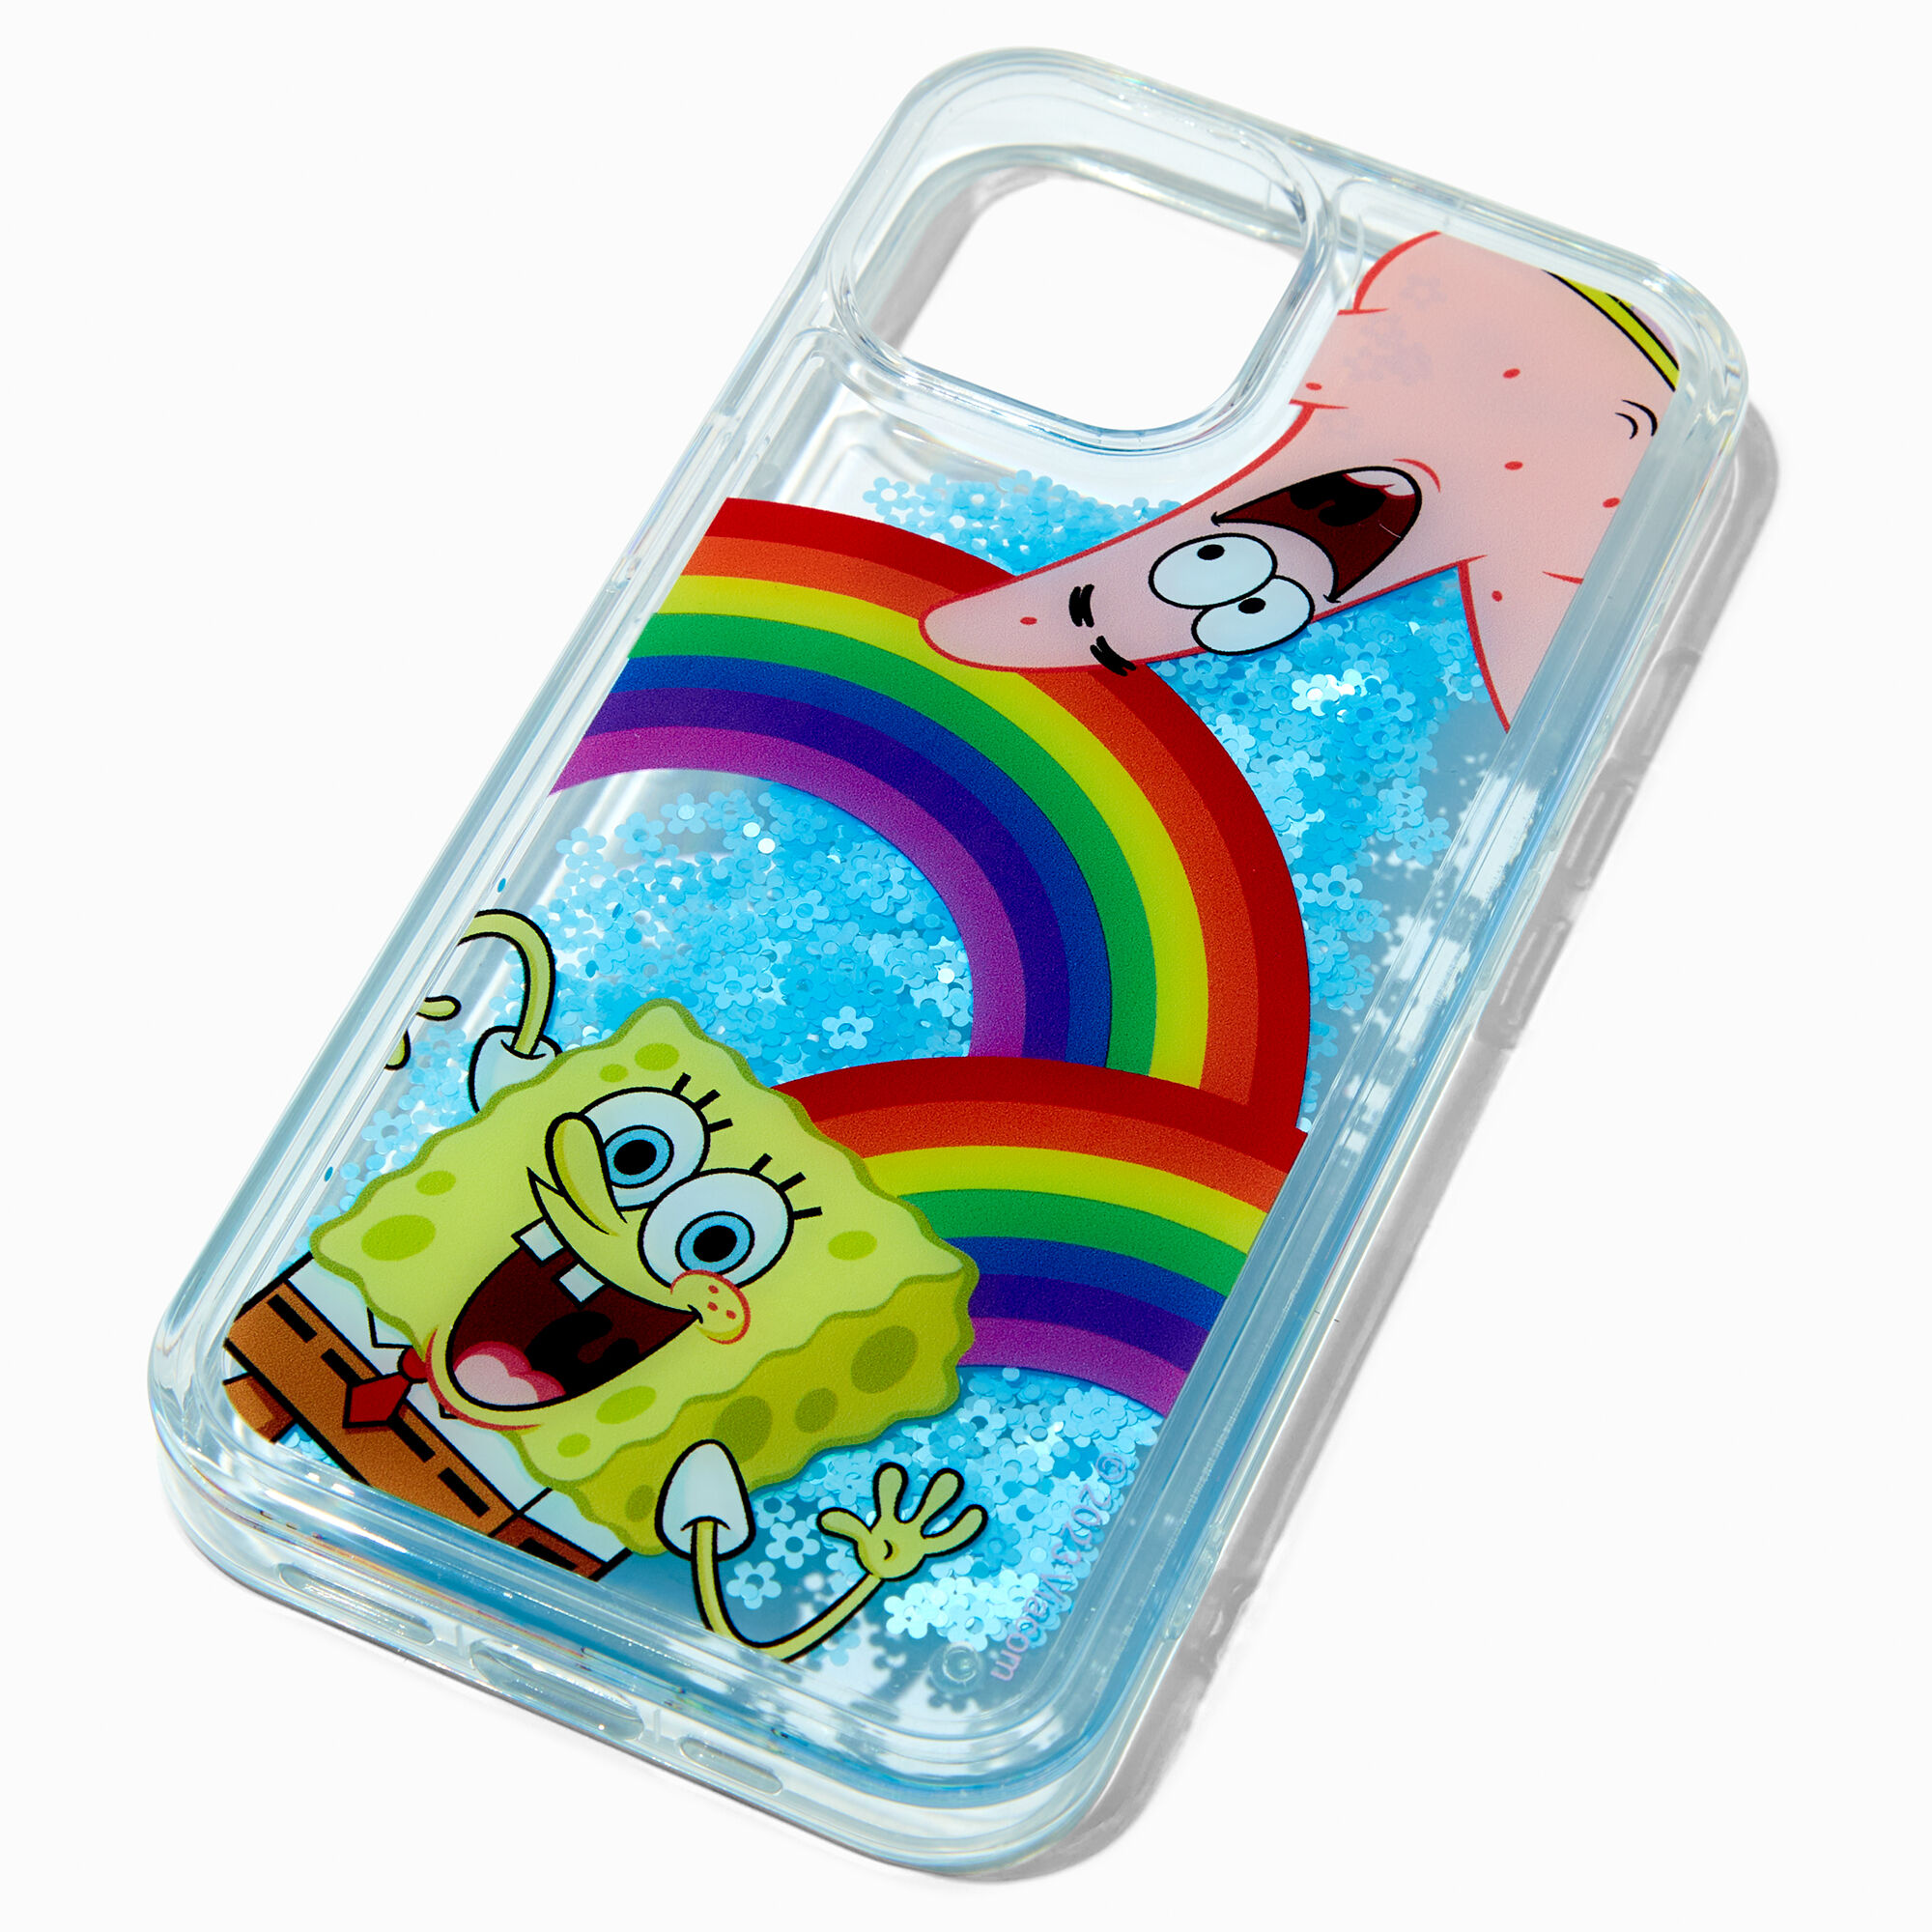 View Claires Spongebob Squarepants LiquidFilled Protective Phone Case Fits Iphone 131415 Rainbow information